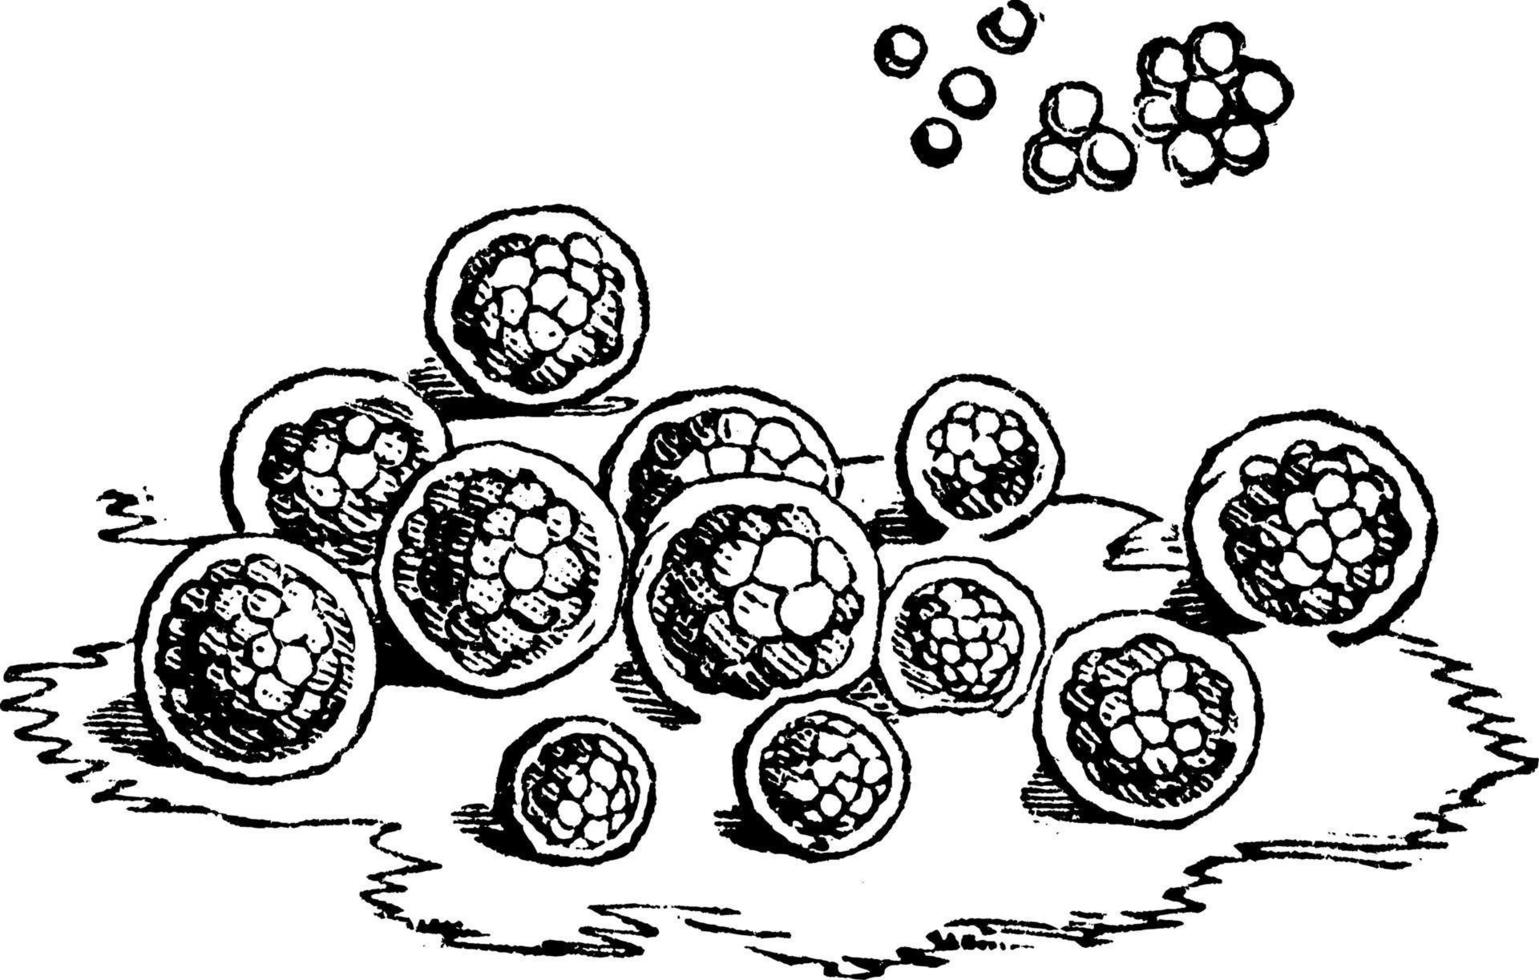 Protococcus algas p.nivalis neve vermelha, ilustração vintage. vetor